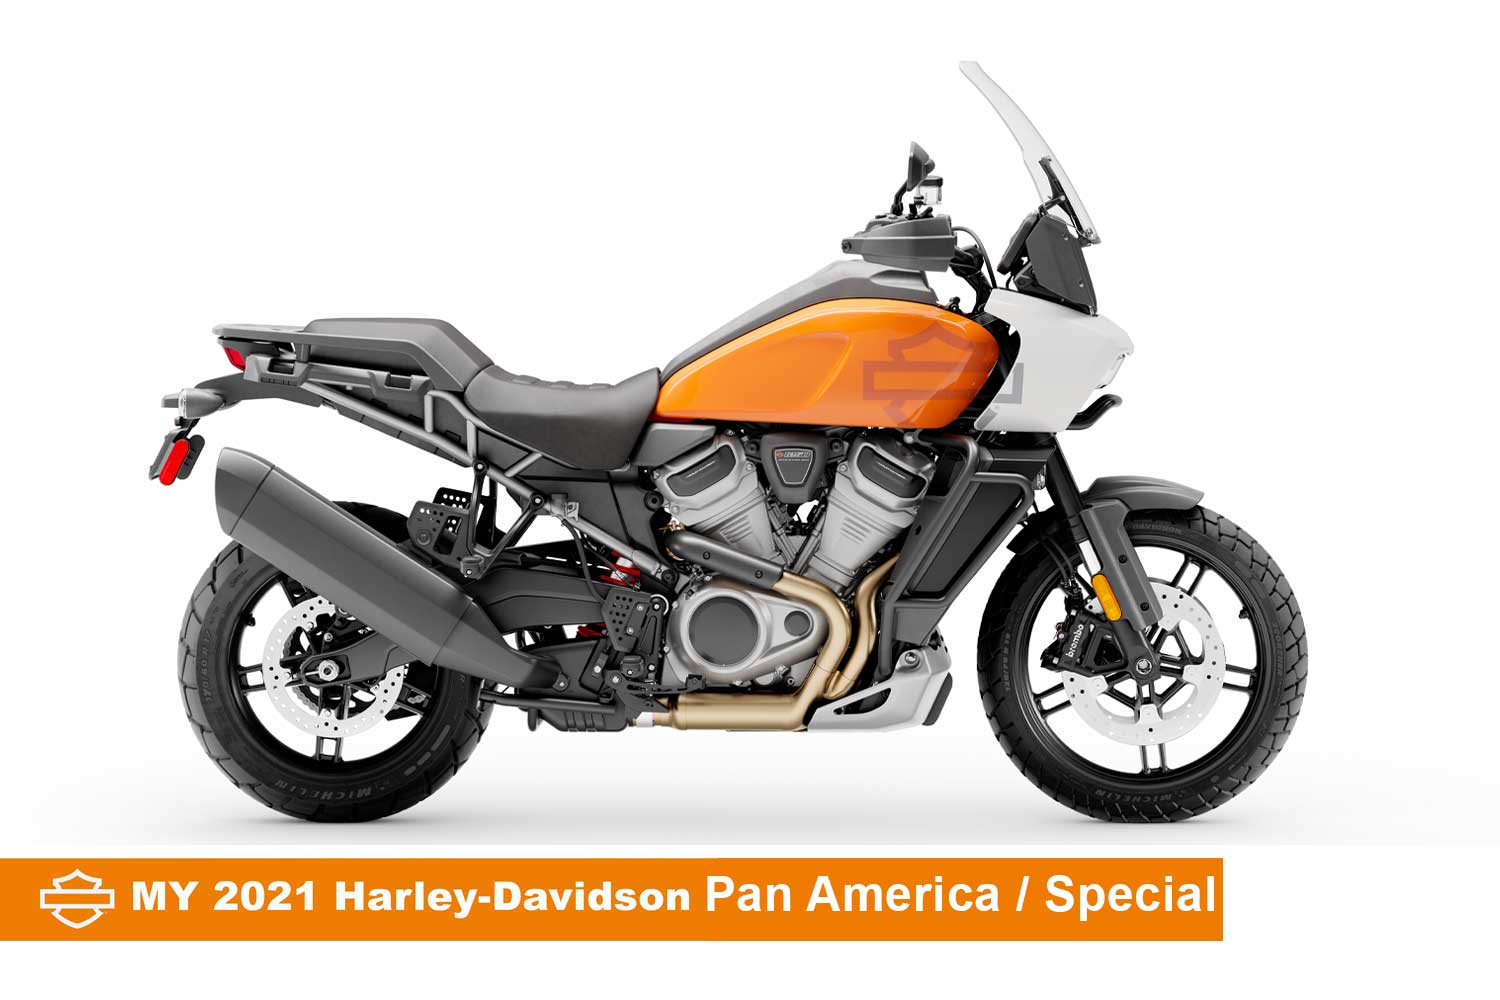 Pan America Special Rick S Motorcycles Harley Davidson Baden Baden